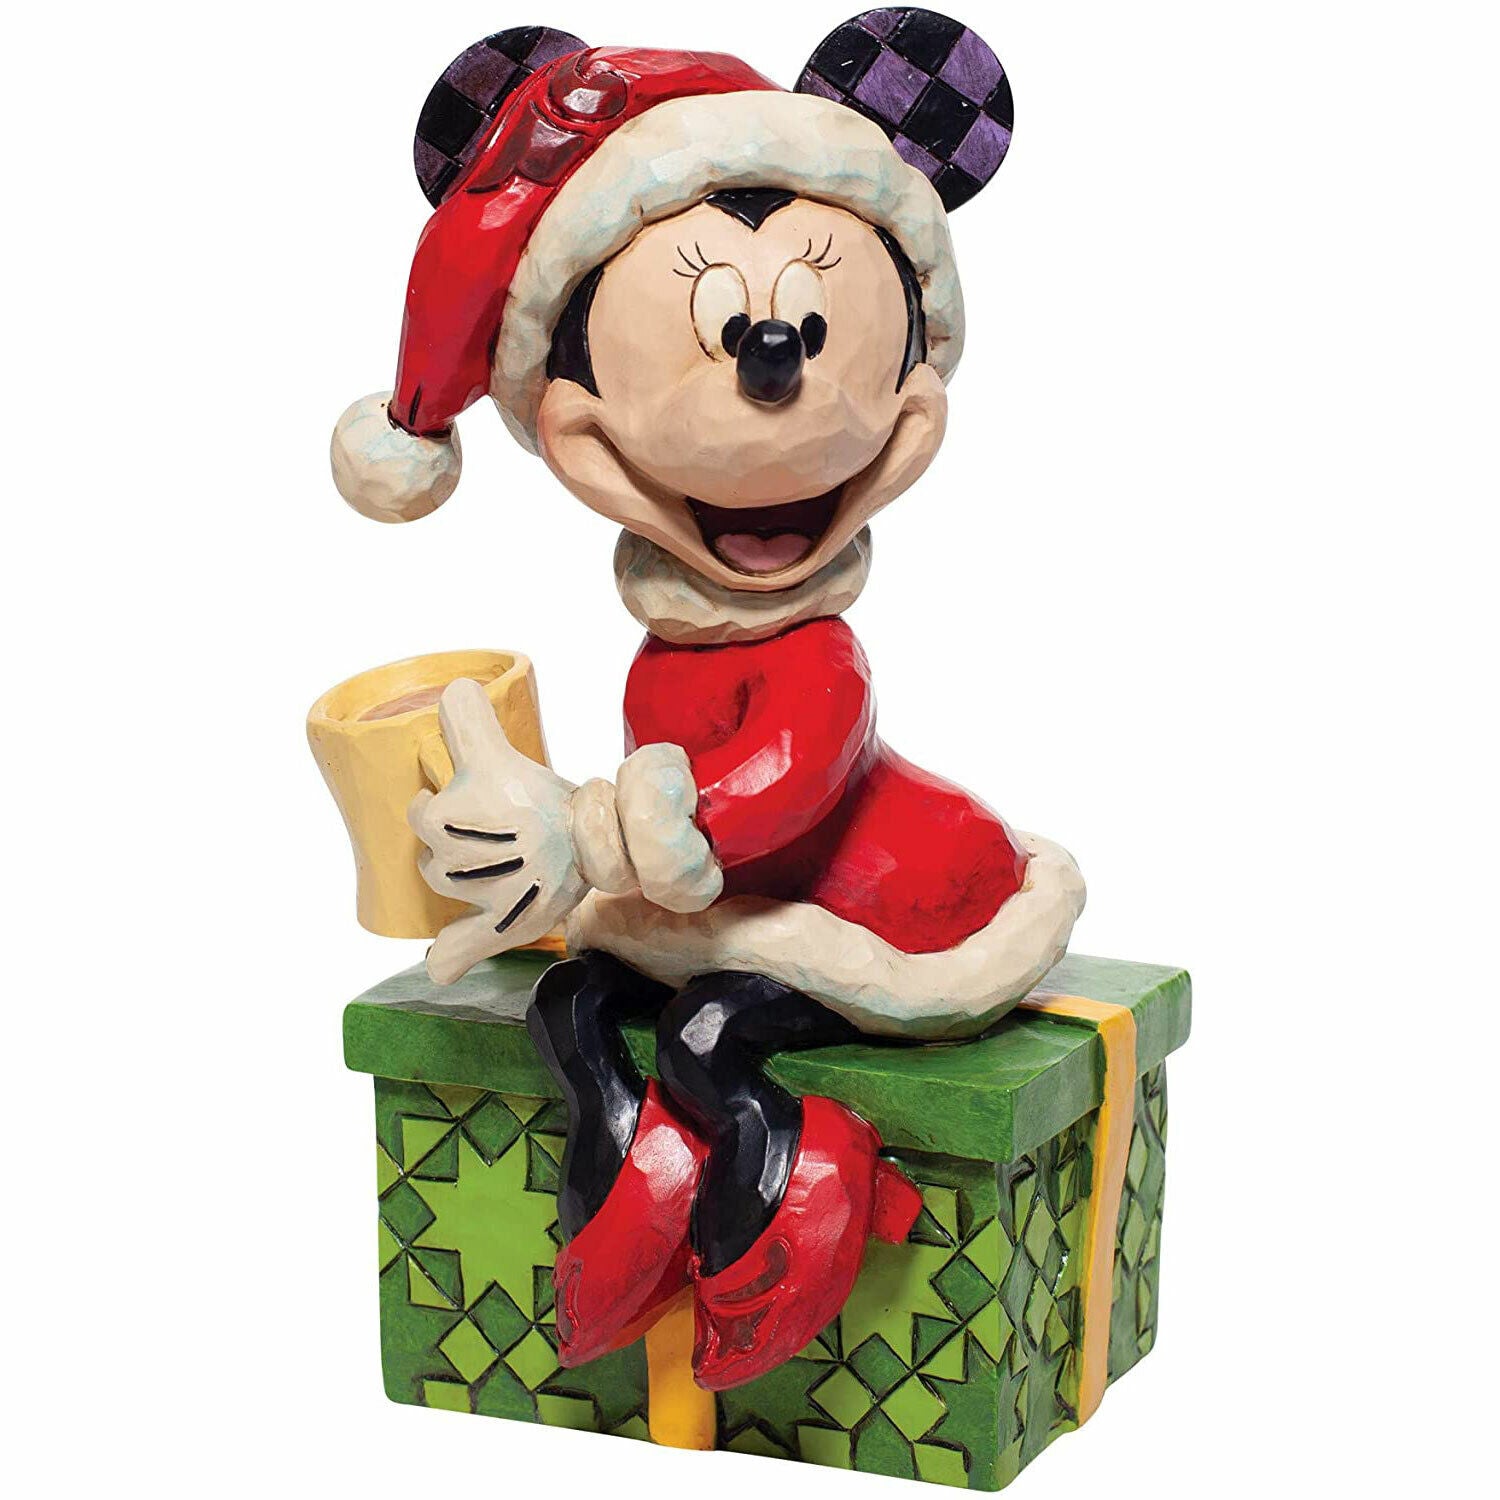 Disney Traditions Santa Minnie Figurine with Hot Chocolate - Chocolate Delight